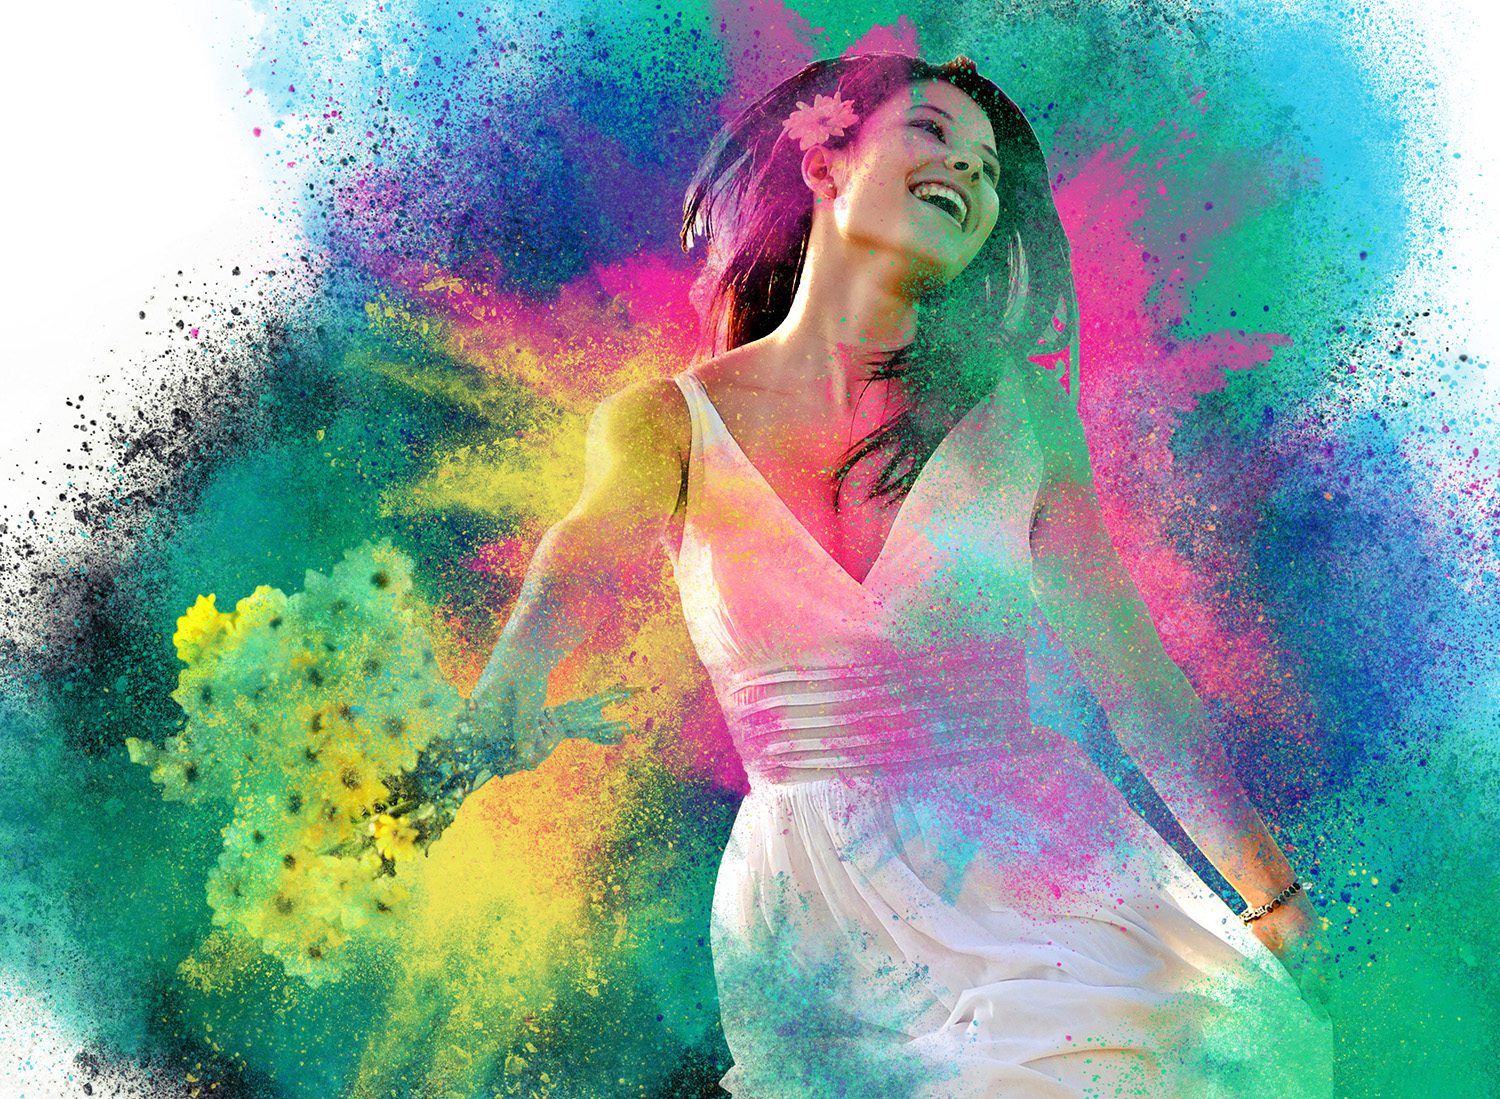 color festival photoshop action dust effect free download